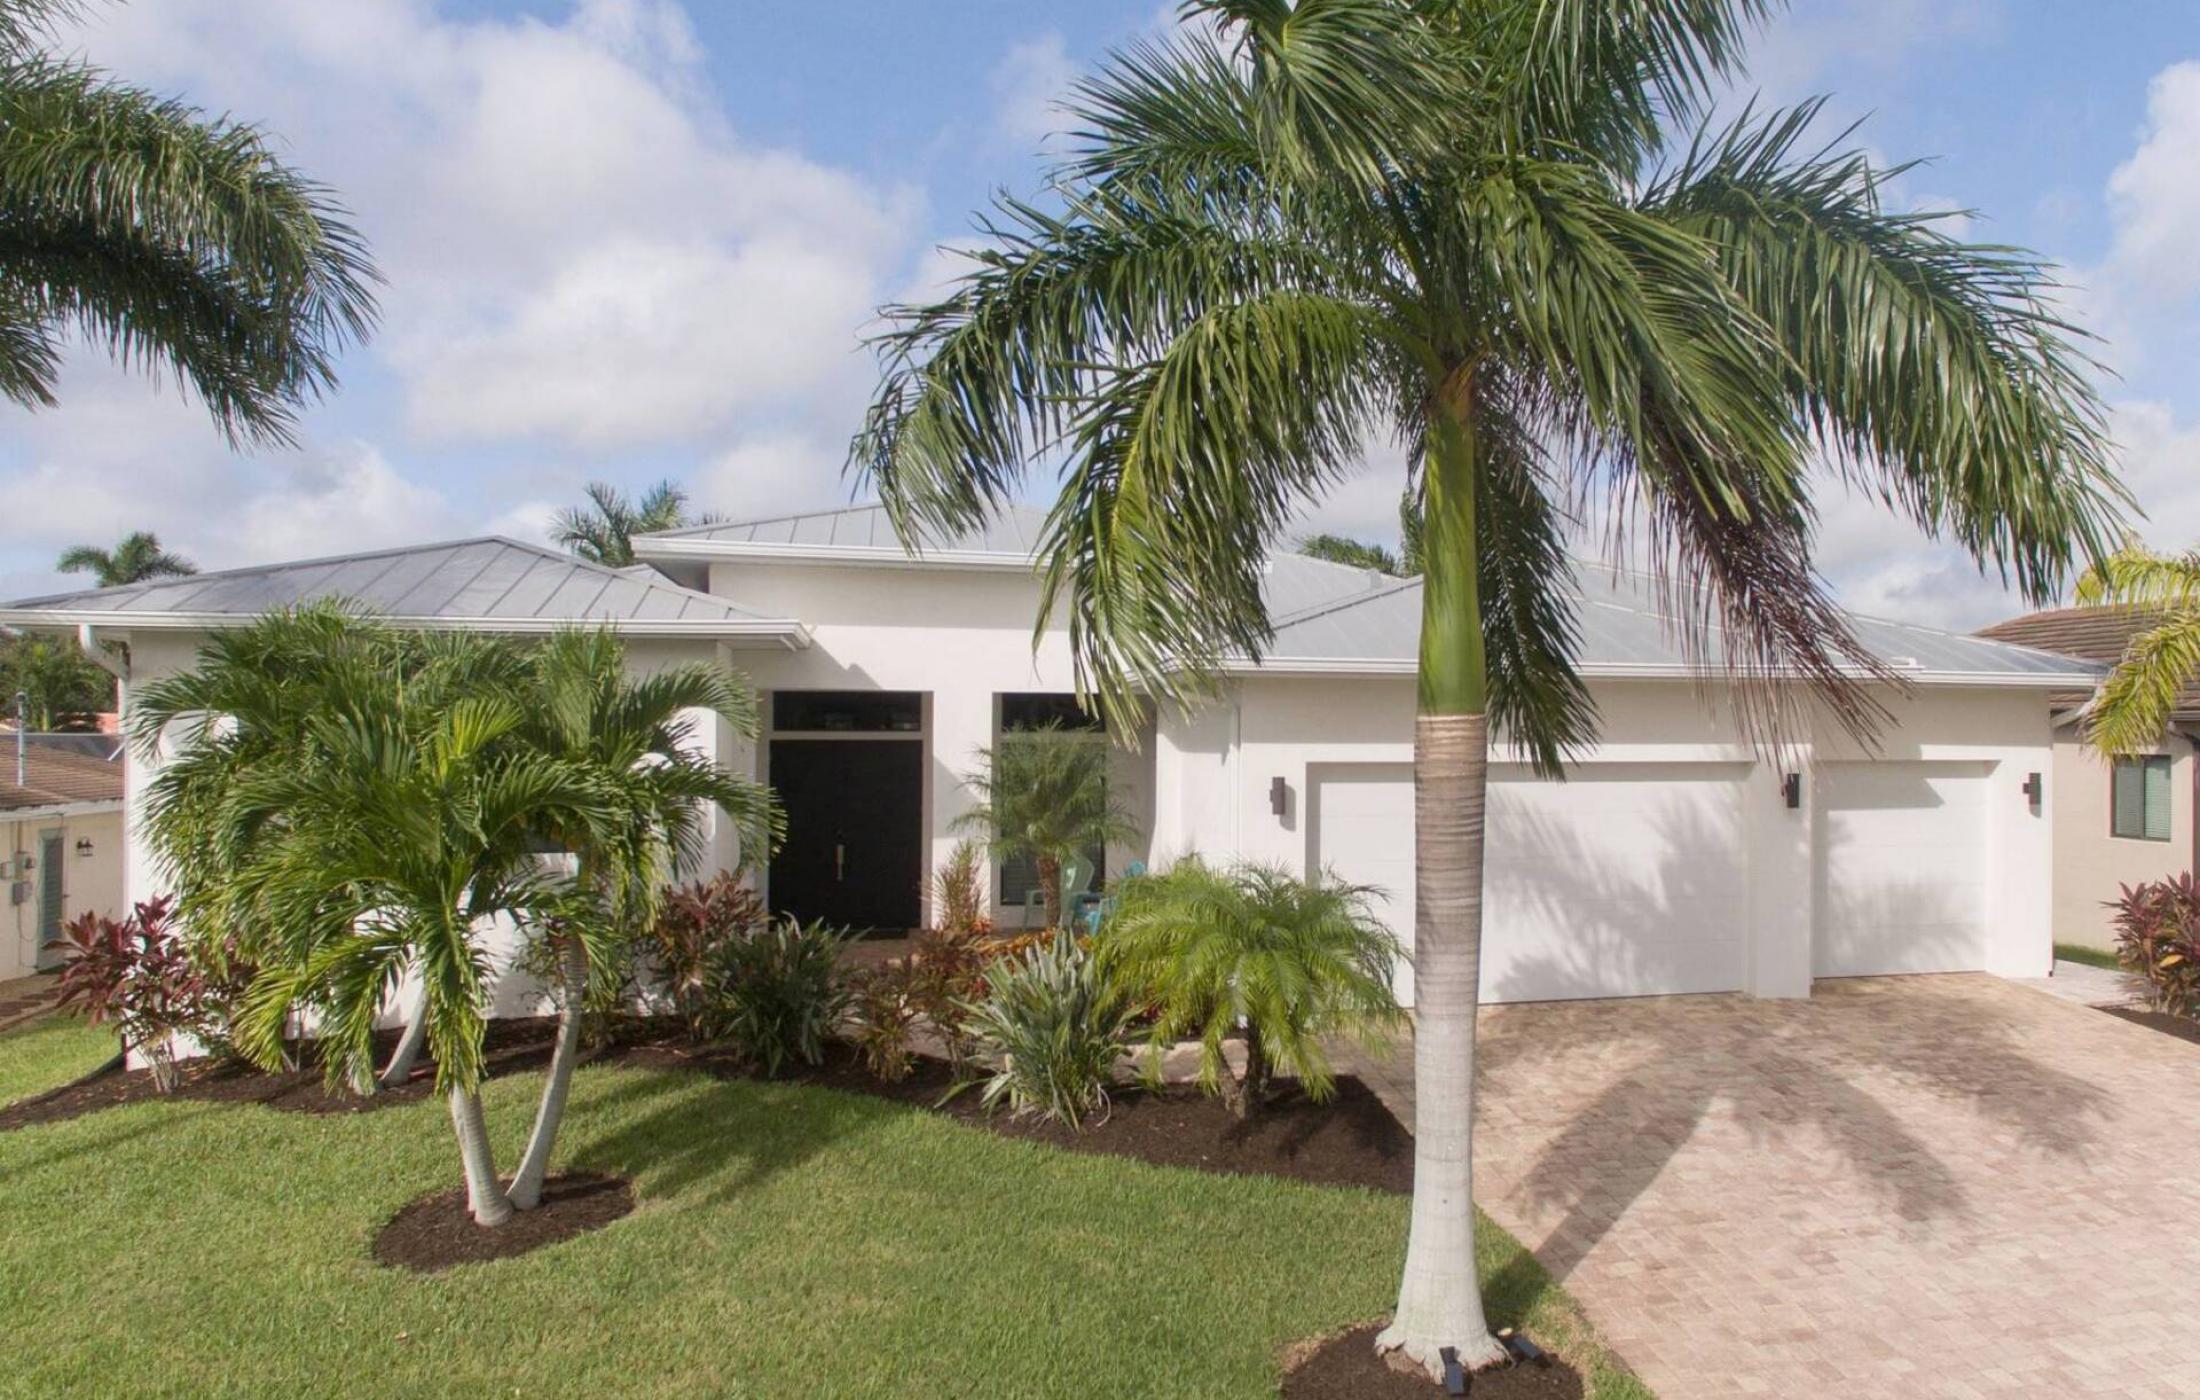 Villa Palm Cove Vacation Rentals In Cape Coral Florida Brigitte Heindl Consulting Inc